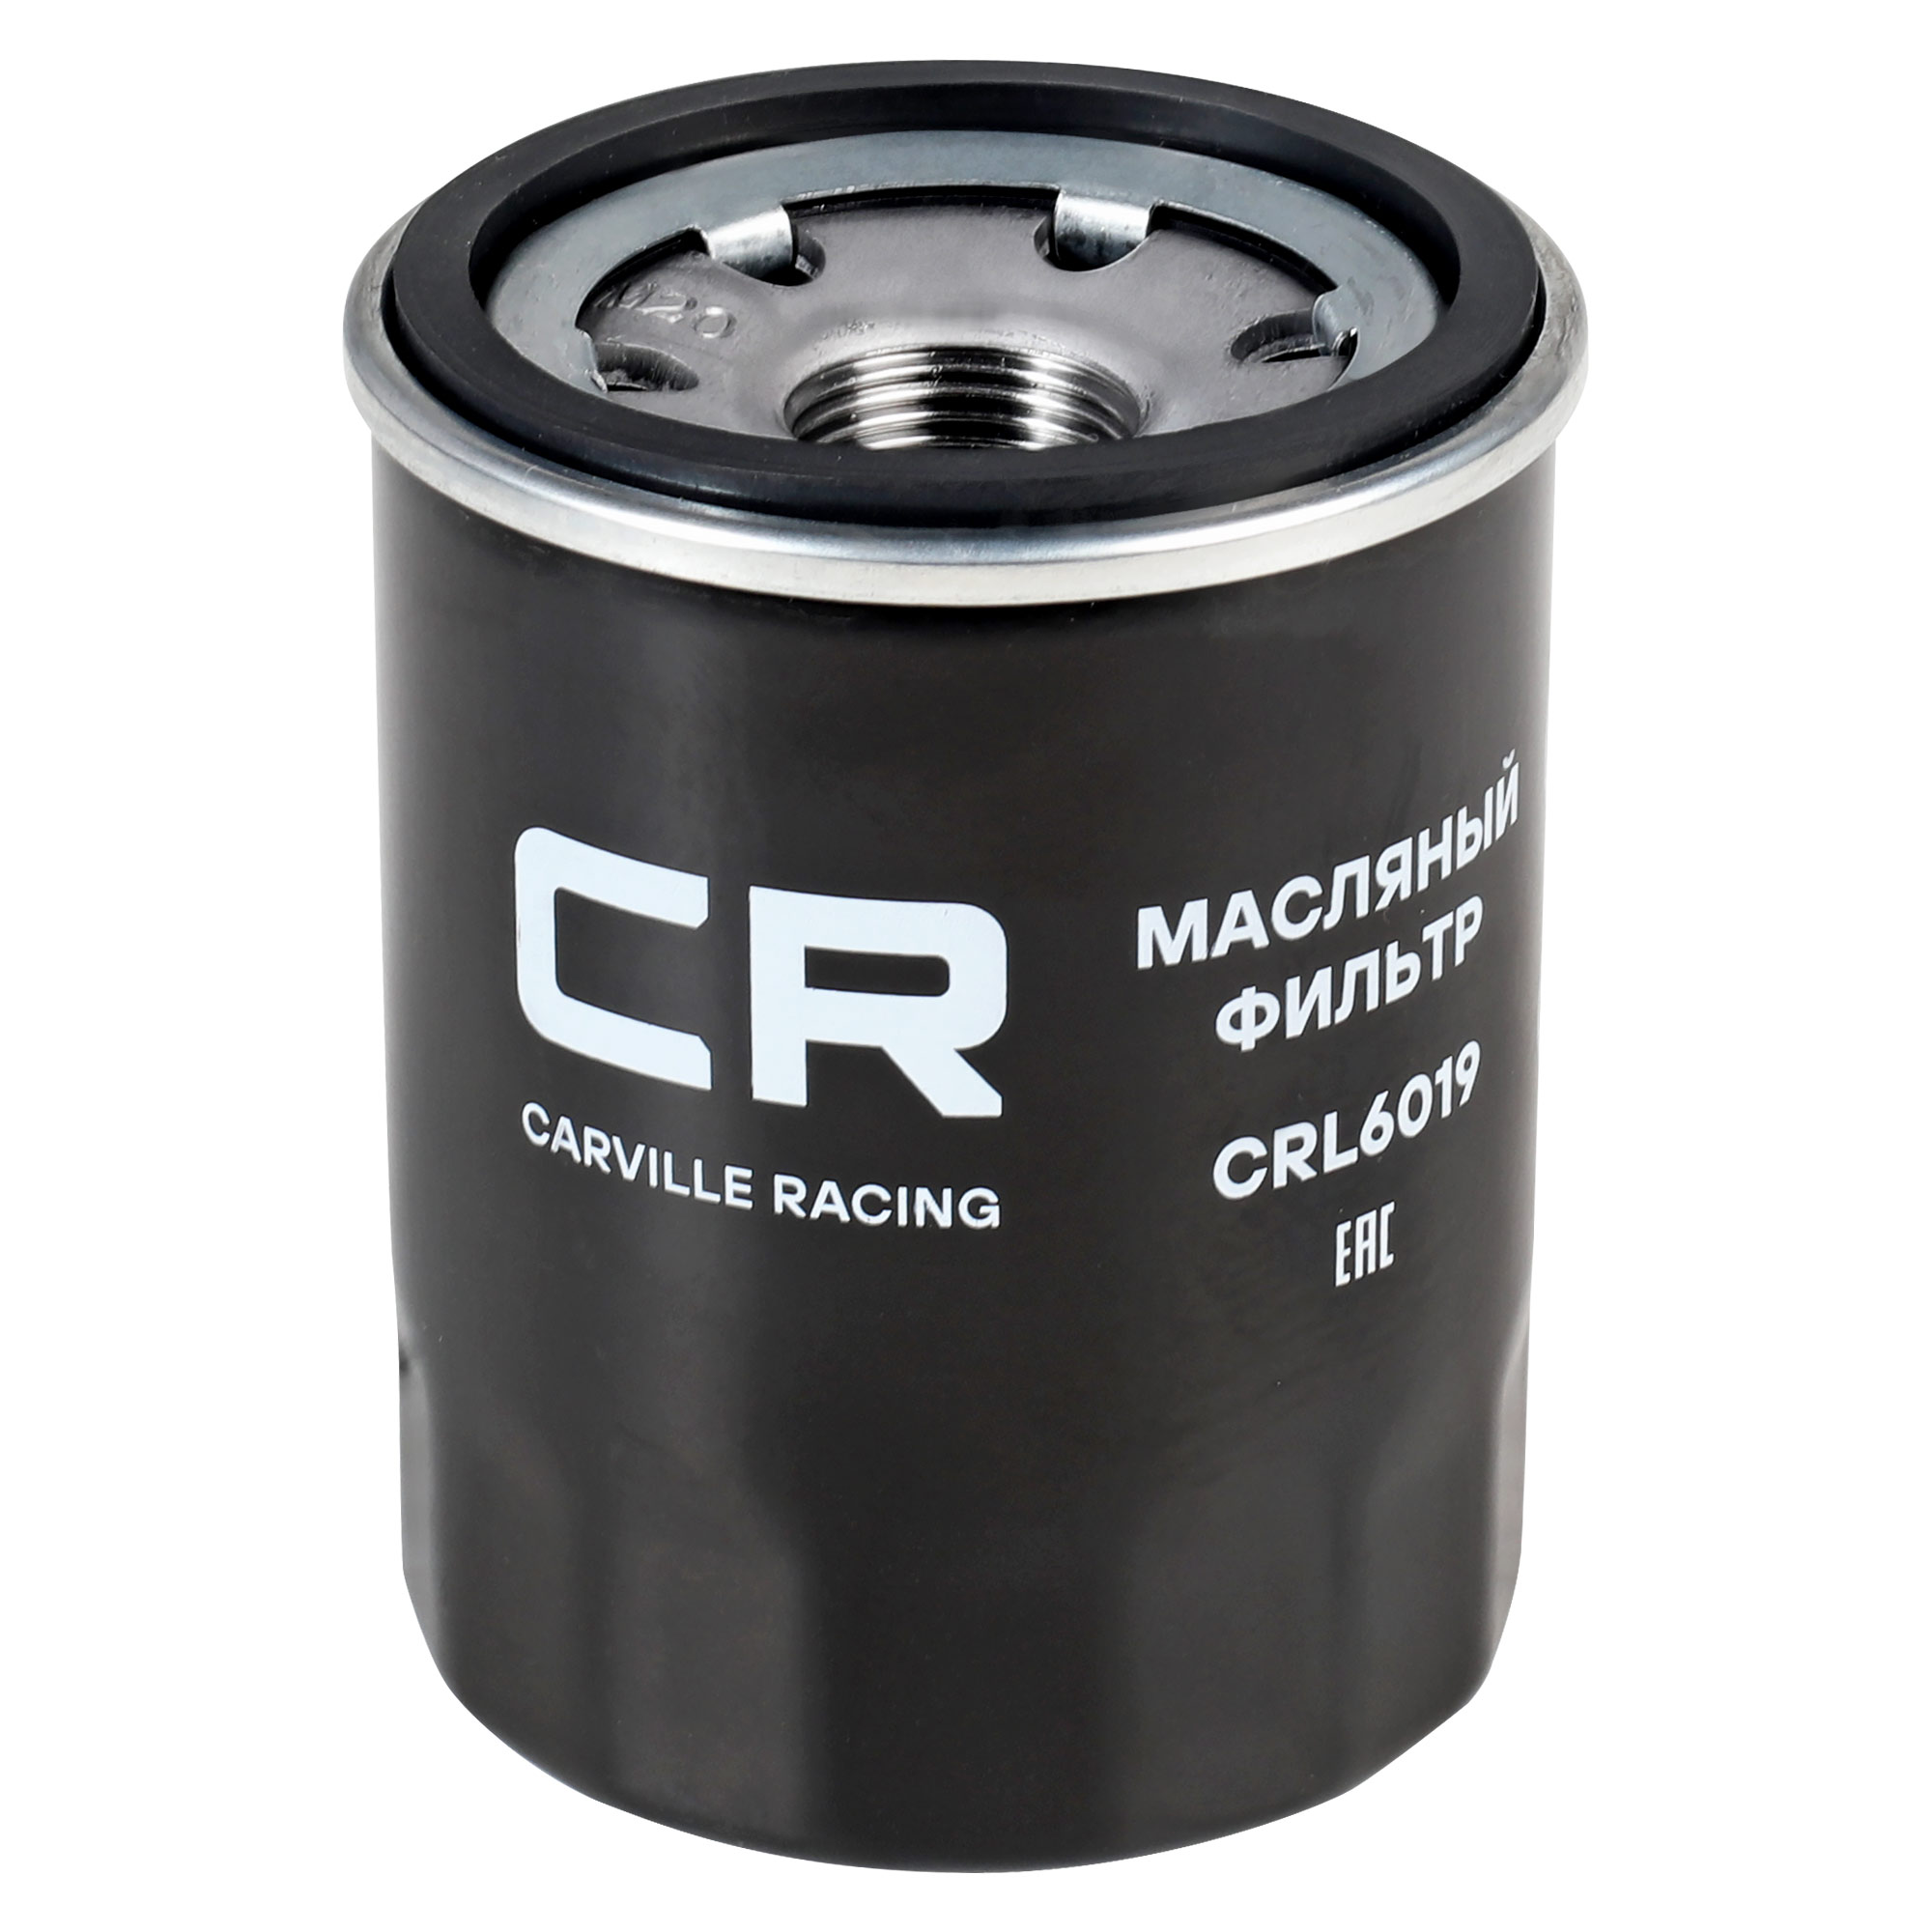 CARVILLE RACING CRL6019 Фильтр для а/м subaru forester (08 ) 2.0/2.5i/outback (09 ) 2.5i/xv (12 ) (масл.) (crl6019)